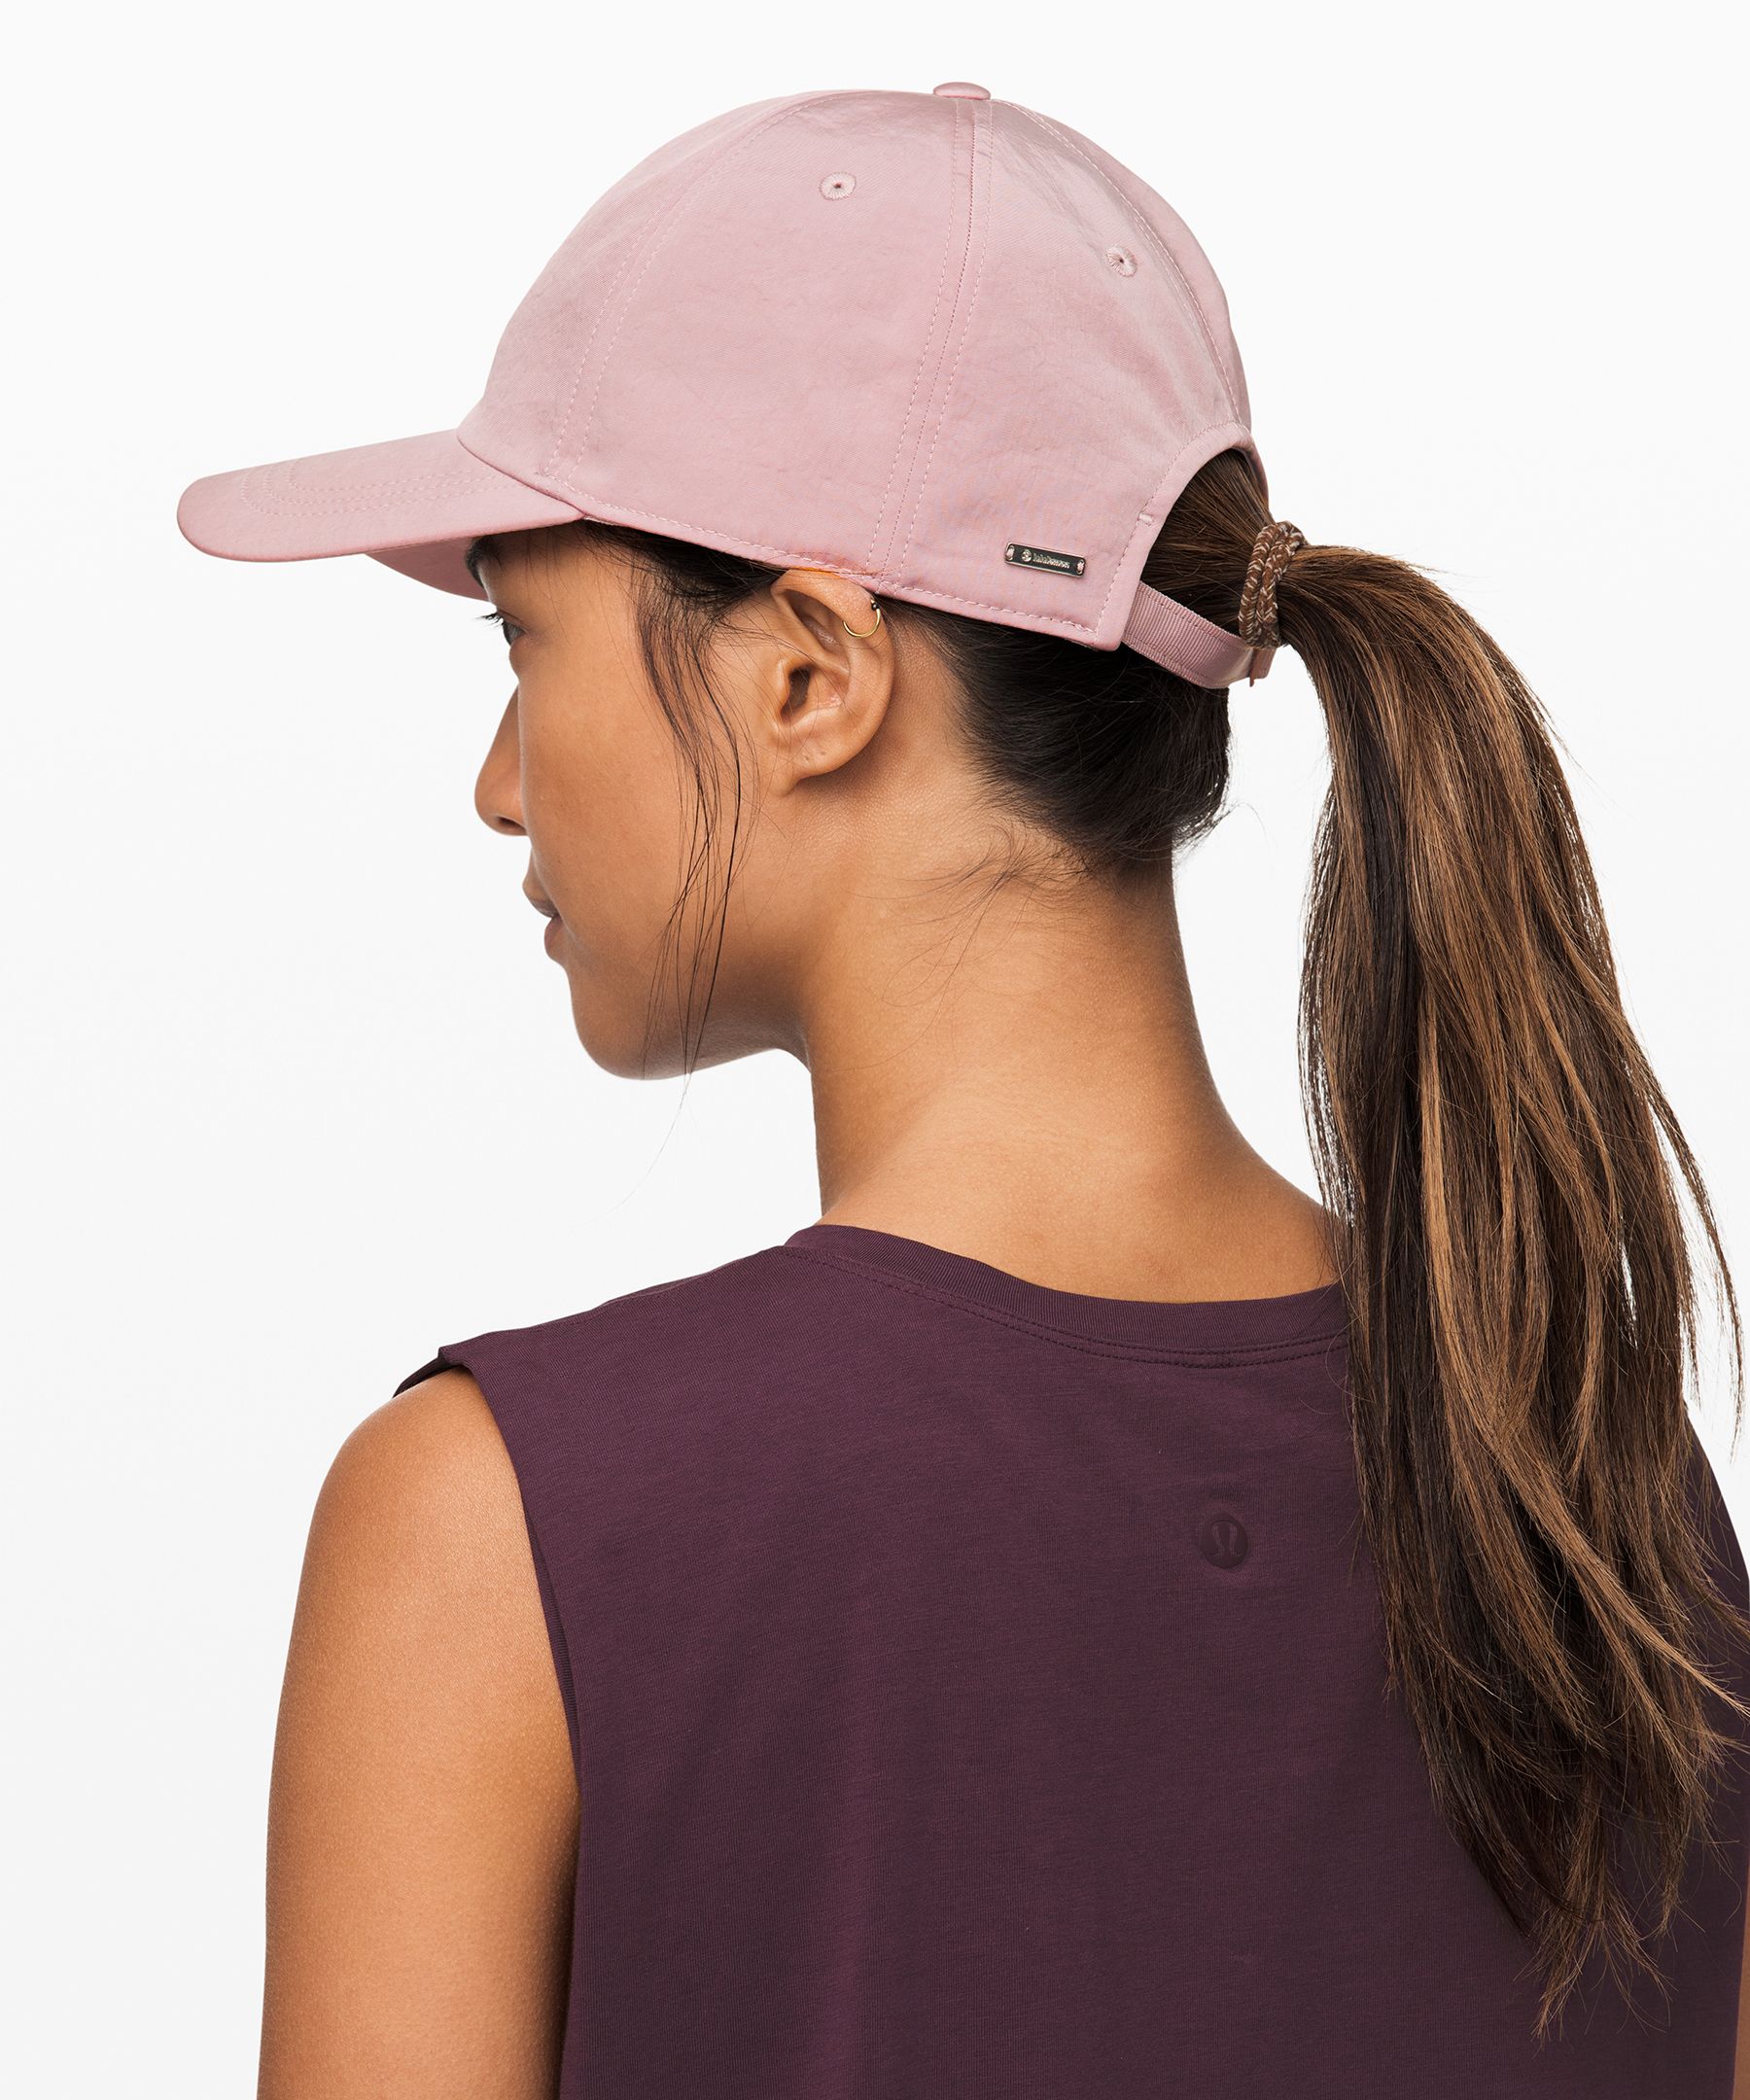 lululemon ponytail hat